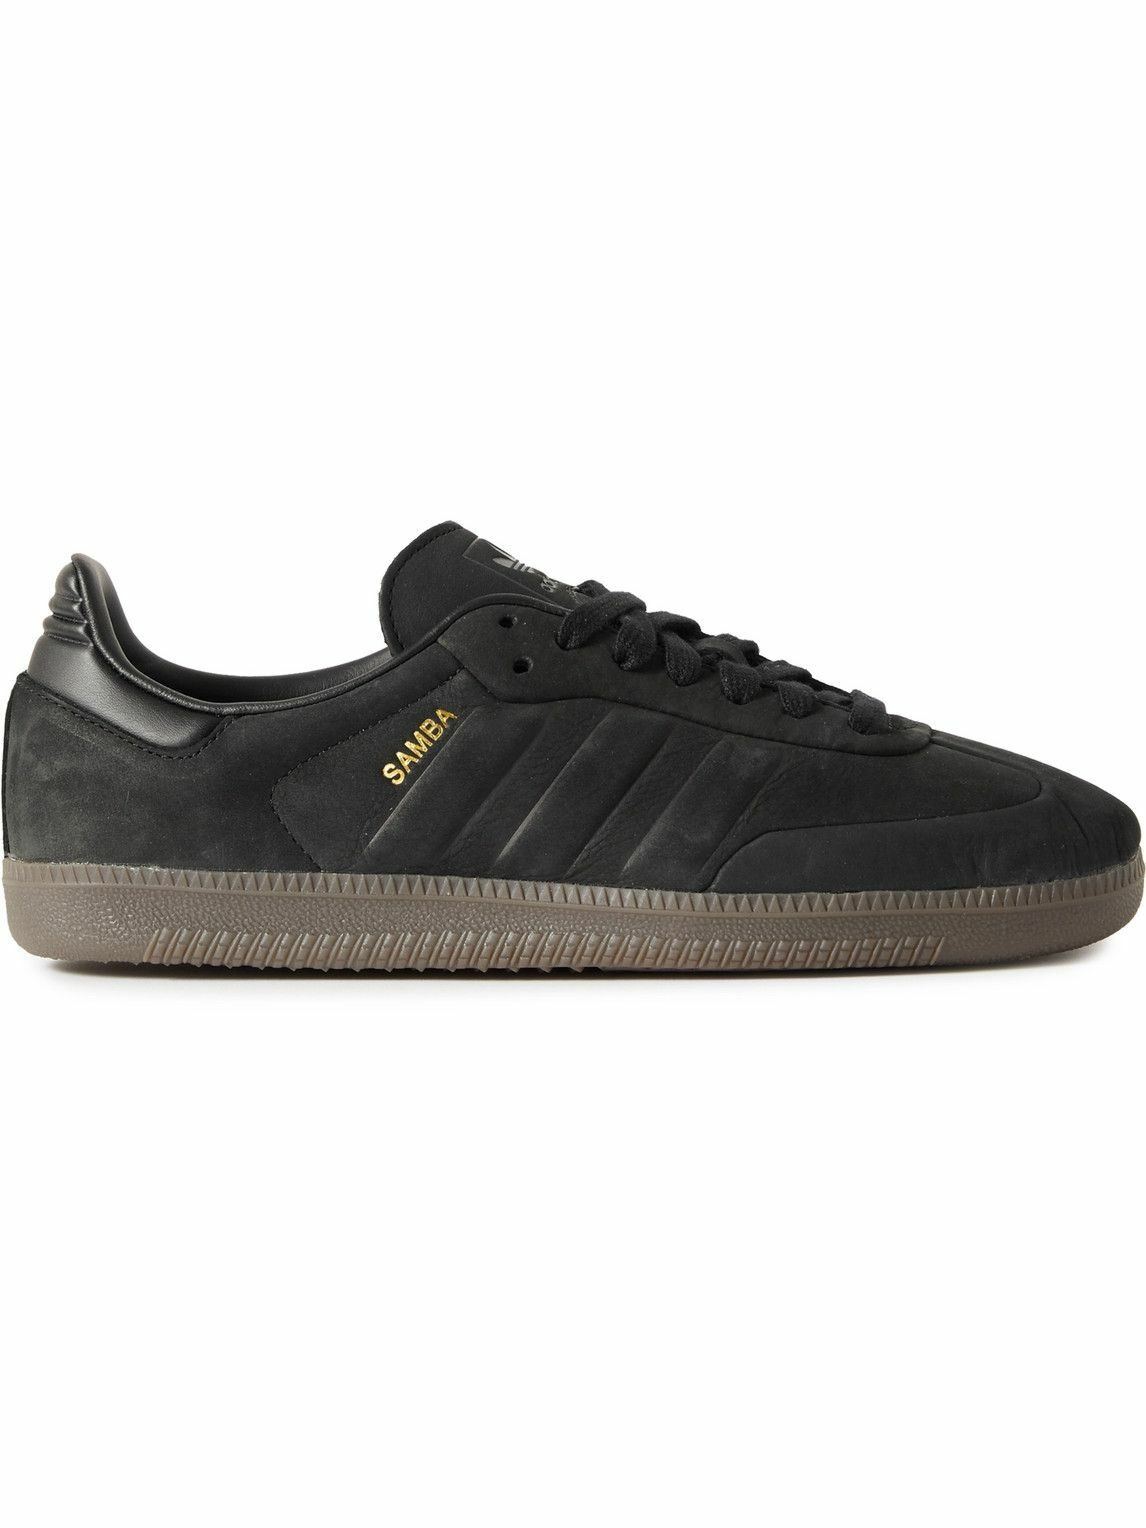 Photo: adidas Originals - Samba OG Leather-Trimmed Embossed Nubuck Sneakers - Black